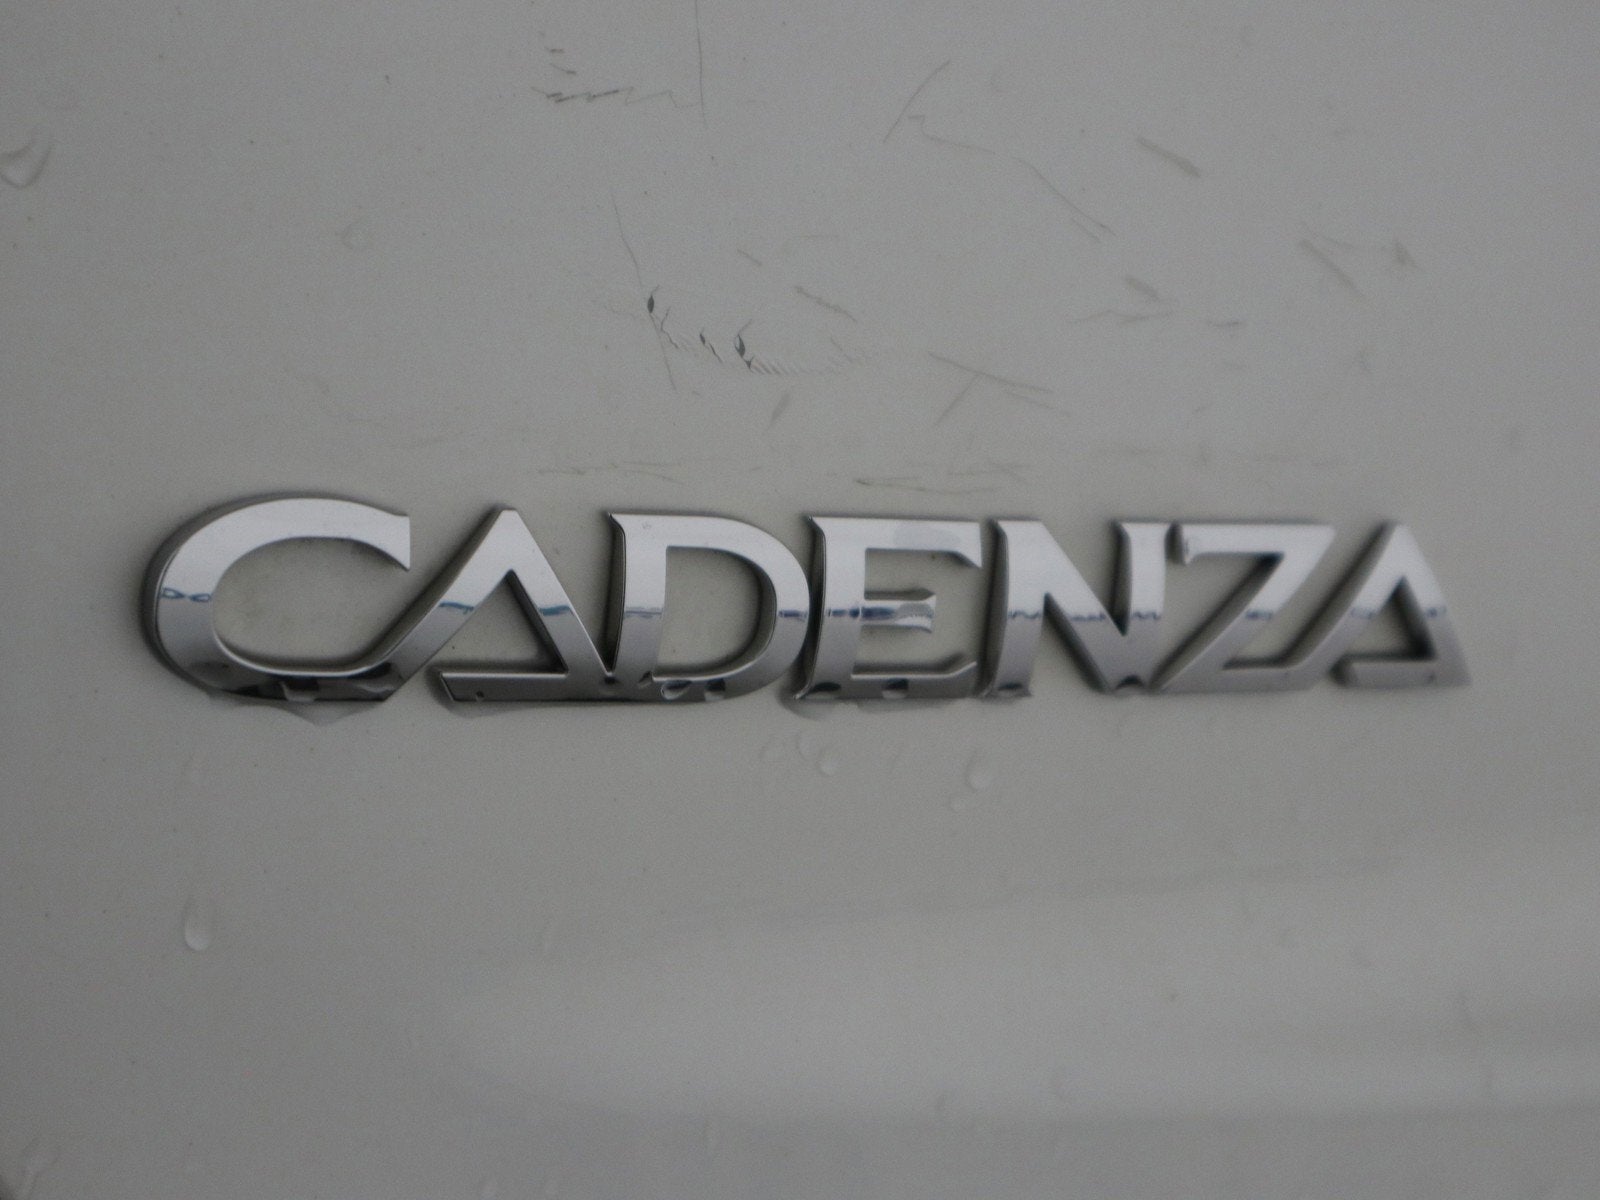 2016 Kia Cadenza Premium